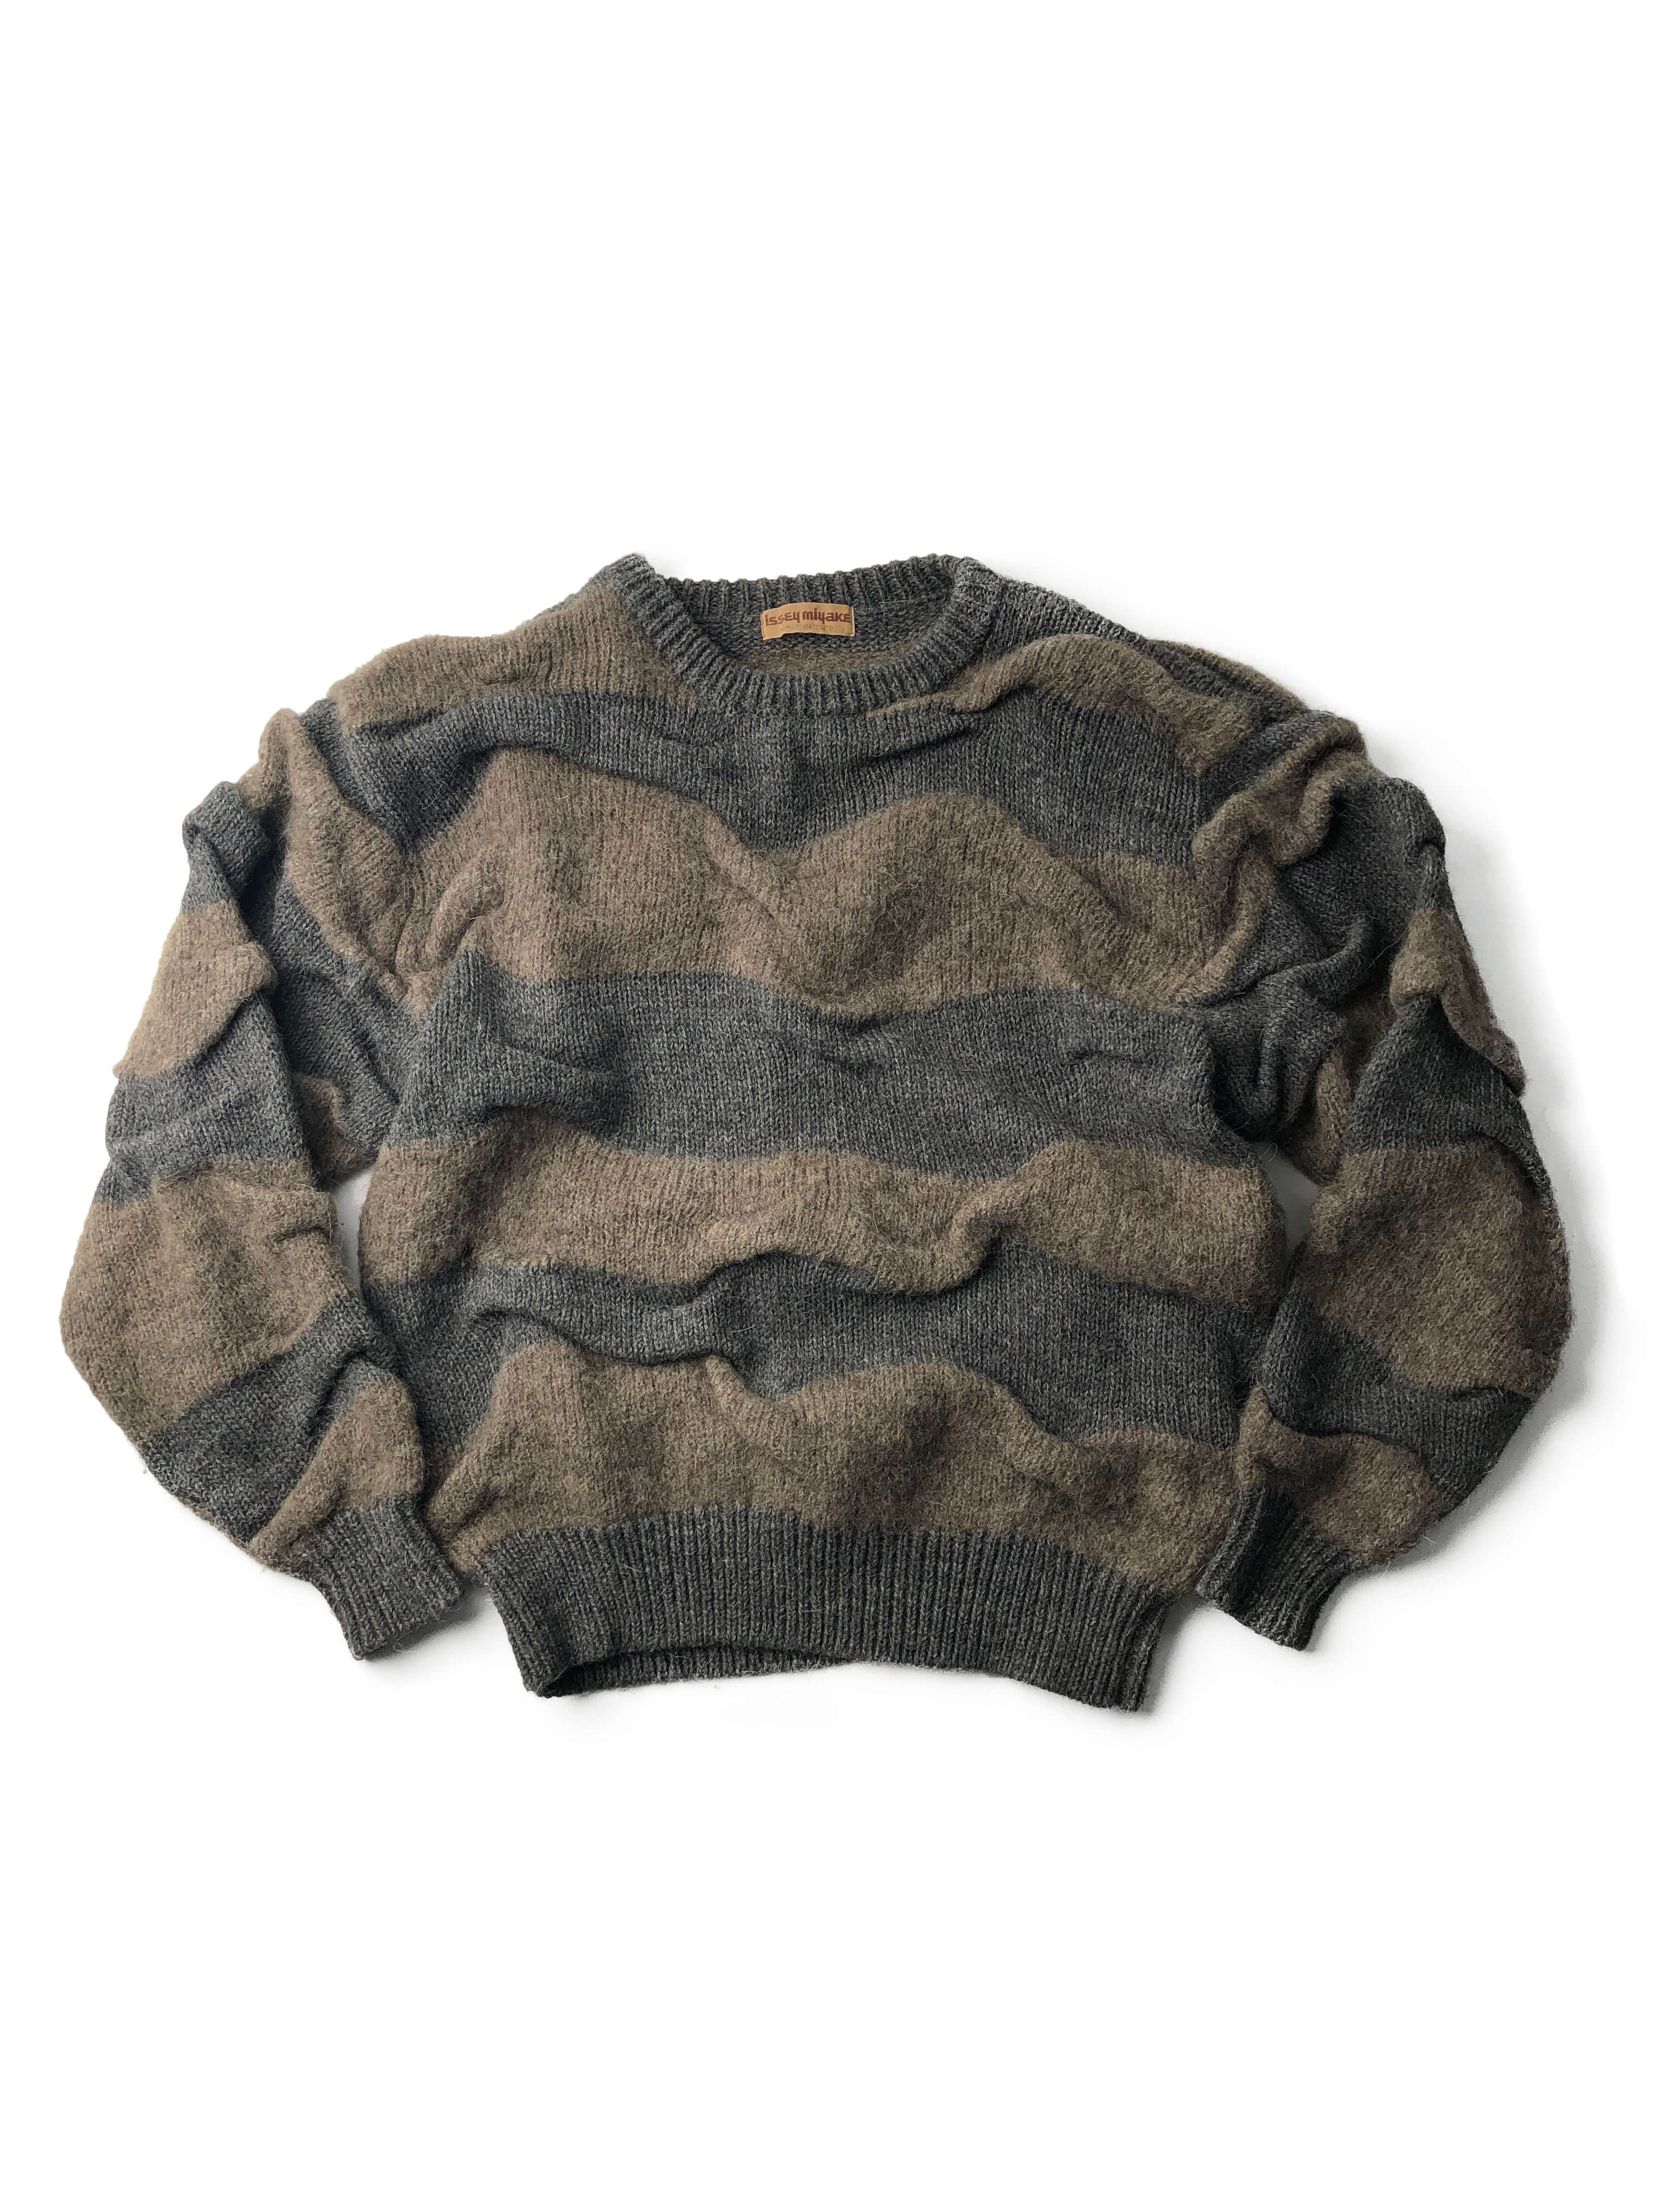 ISSEY MIYAKE 1983aw wrinkle sweater